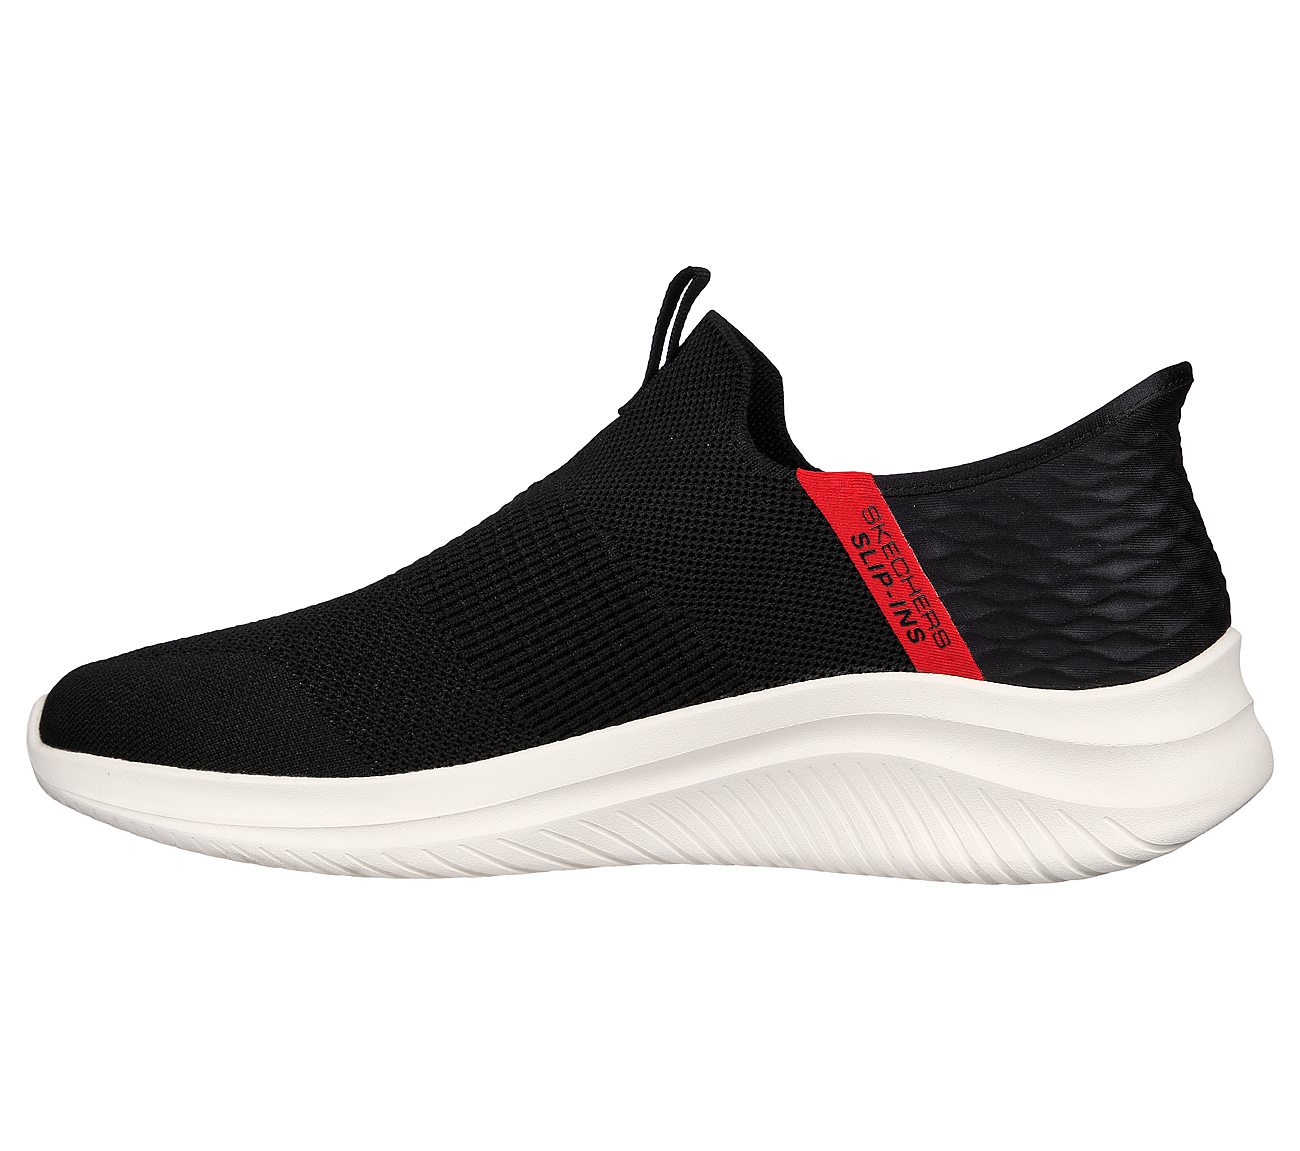 ULTRA FLEX 3.0 - VIEWPOINT, BLACK/RED Footwear Left View